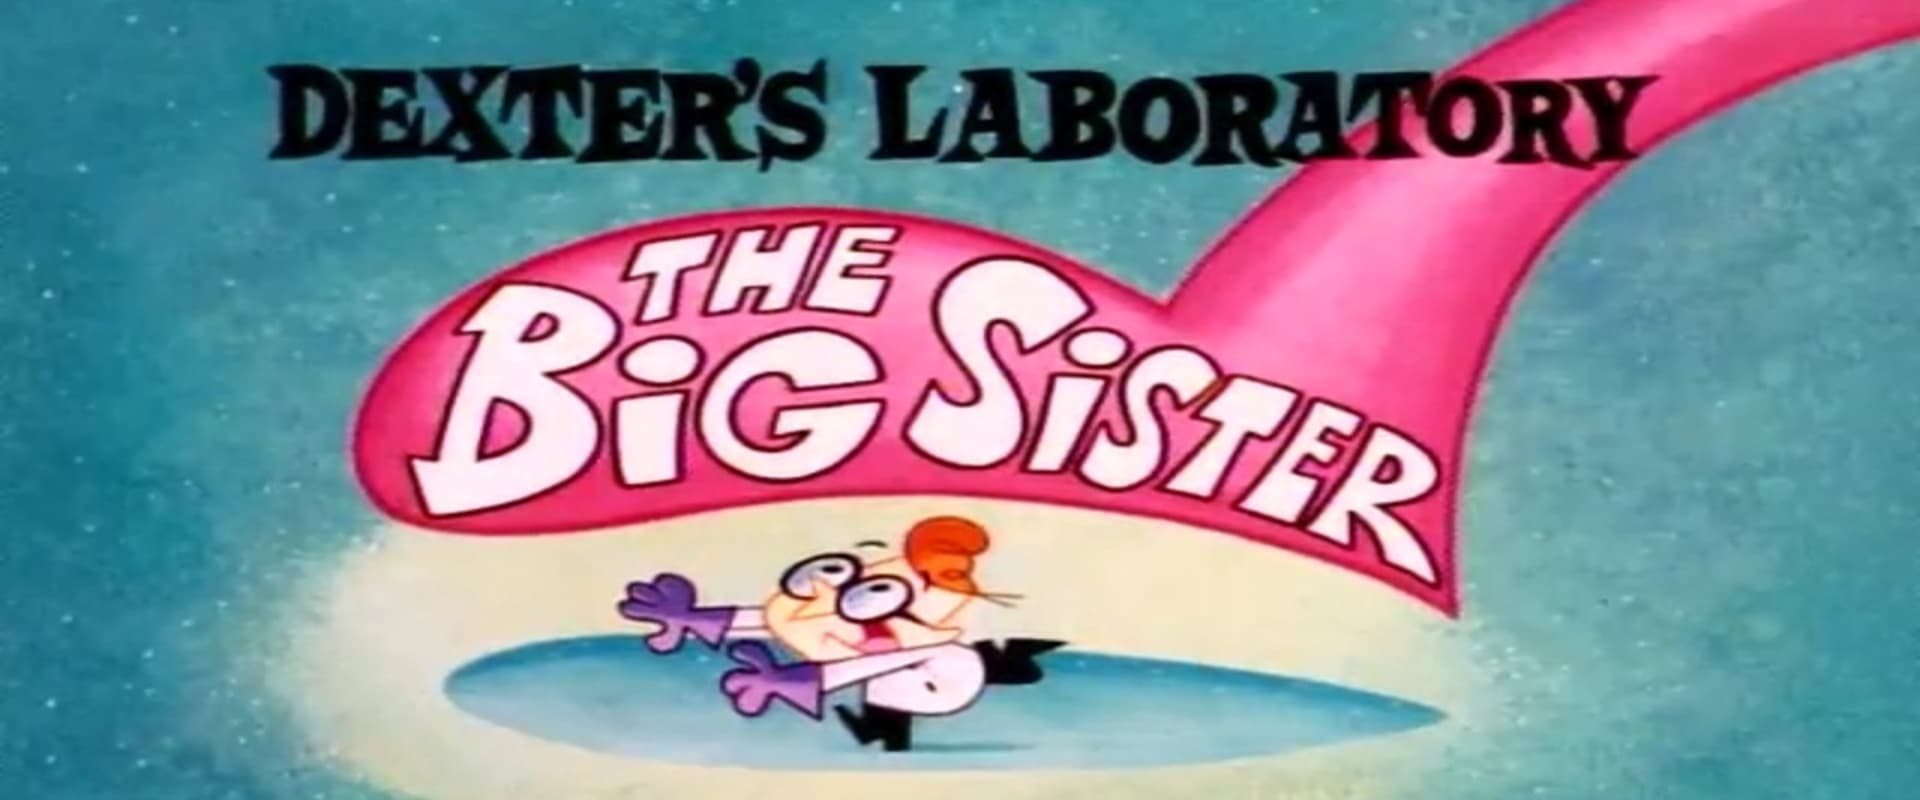 Dexter's Laboratory: The Big Sister